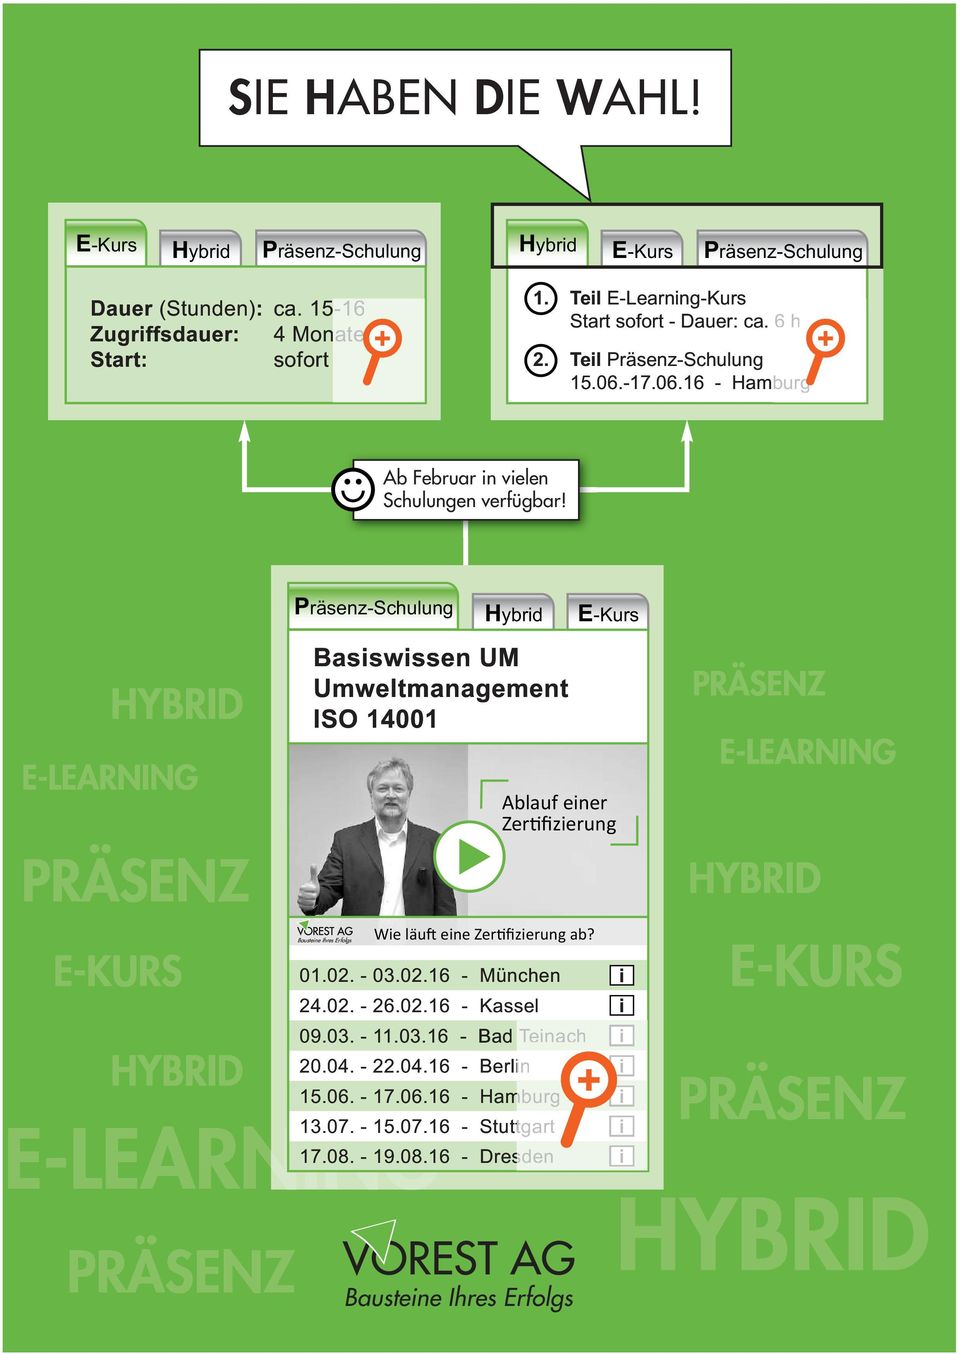 Präsenz-Schulung Hybrd Basswssen UM Umweltmanagement ISO 14001 E-Kurs Ablauf ener 01.02. - 03.02.16 - München 24.02. - 26.02.16 - Kassel 09.03. - 11.